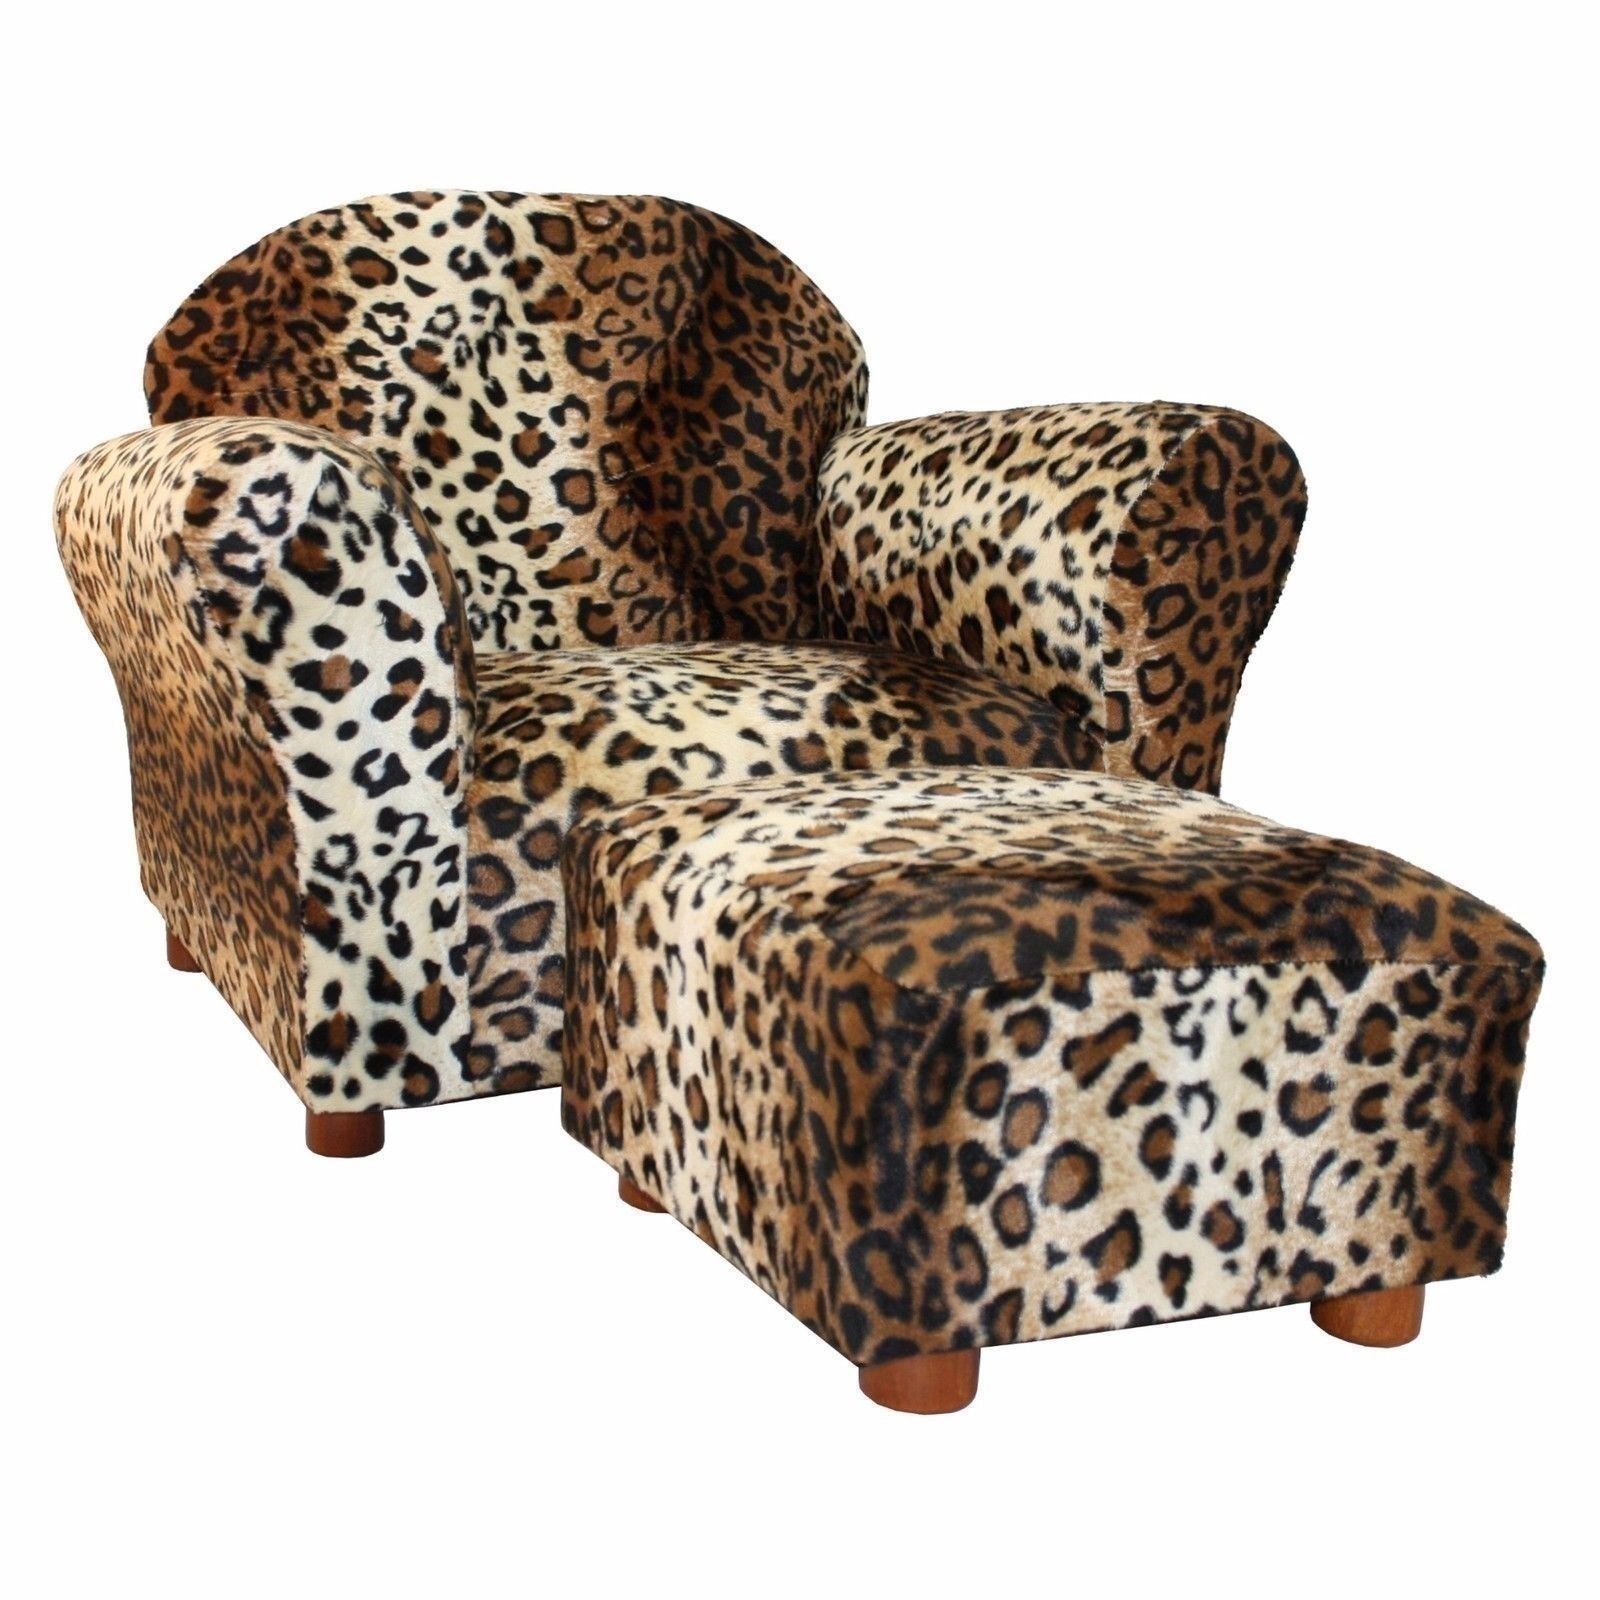 Kids Club Chair Ottoman Set Leopard Brown Tan Plush Animal Faux In Kids Sofa Chair And Ottoman Set Zebra (View 1 of 15)